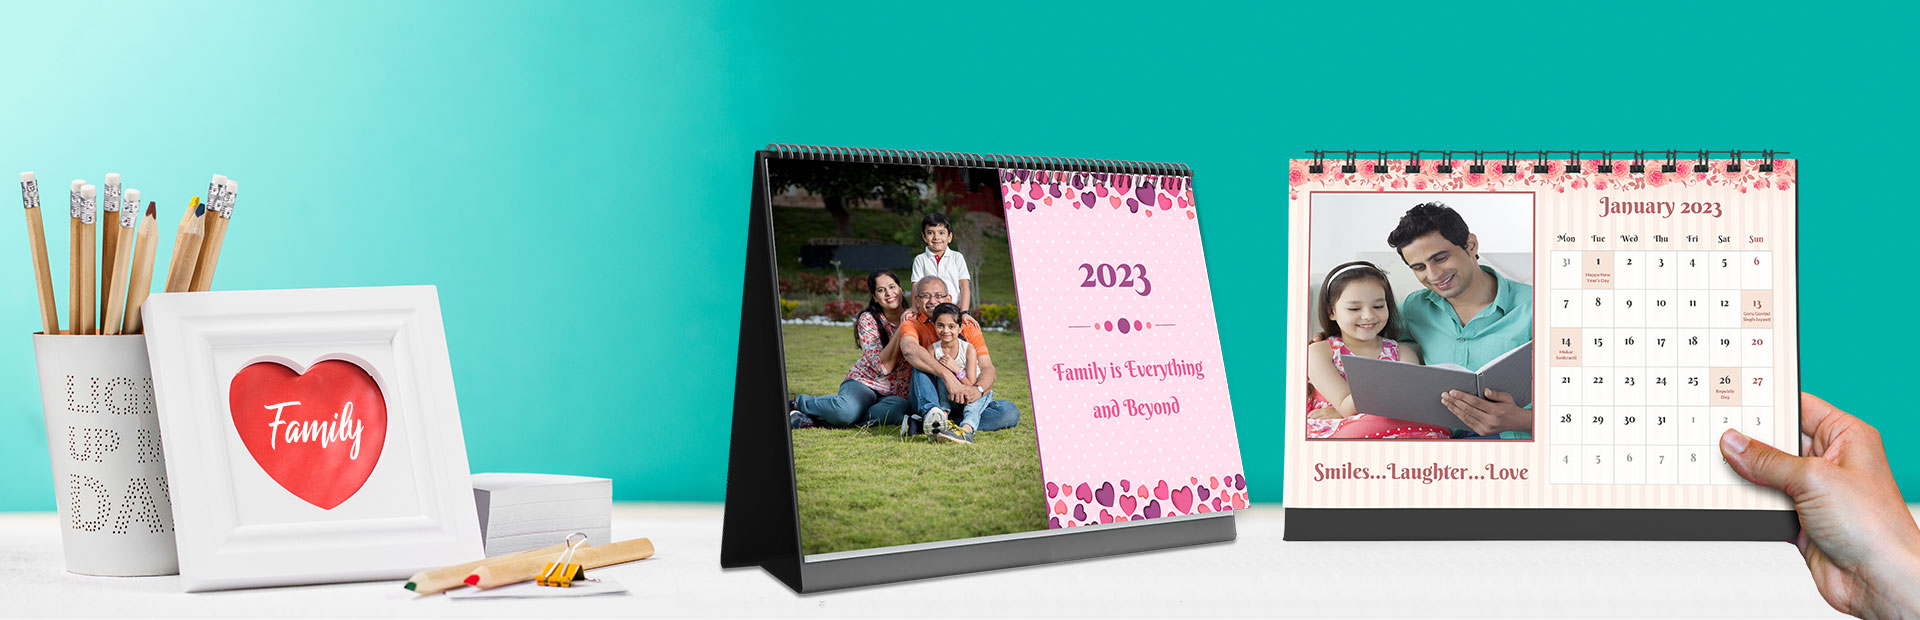 Family Bonds Photo Calendars Online